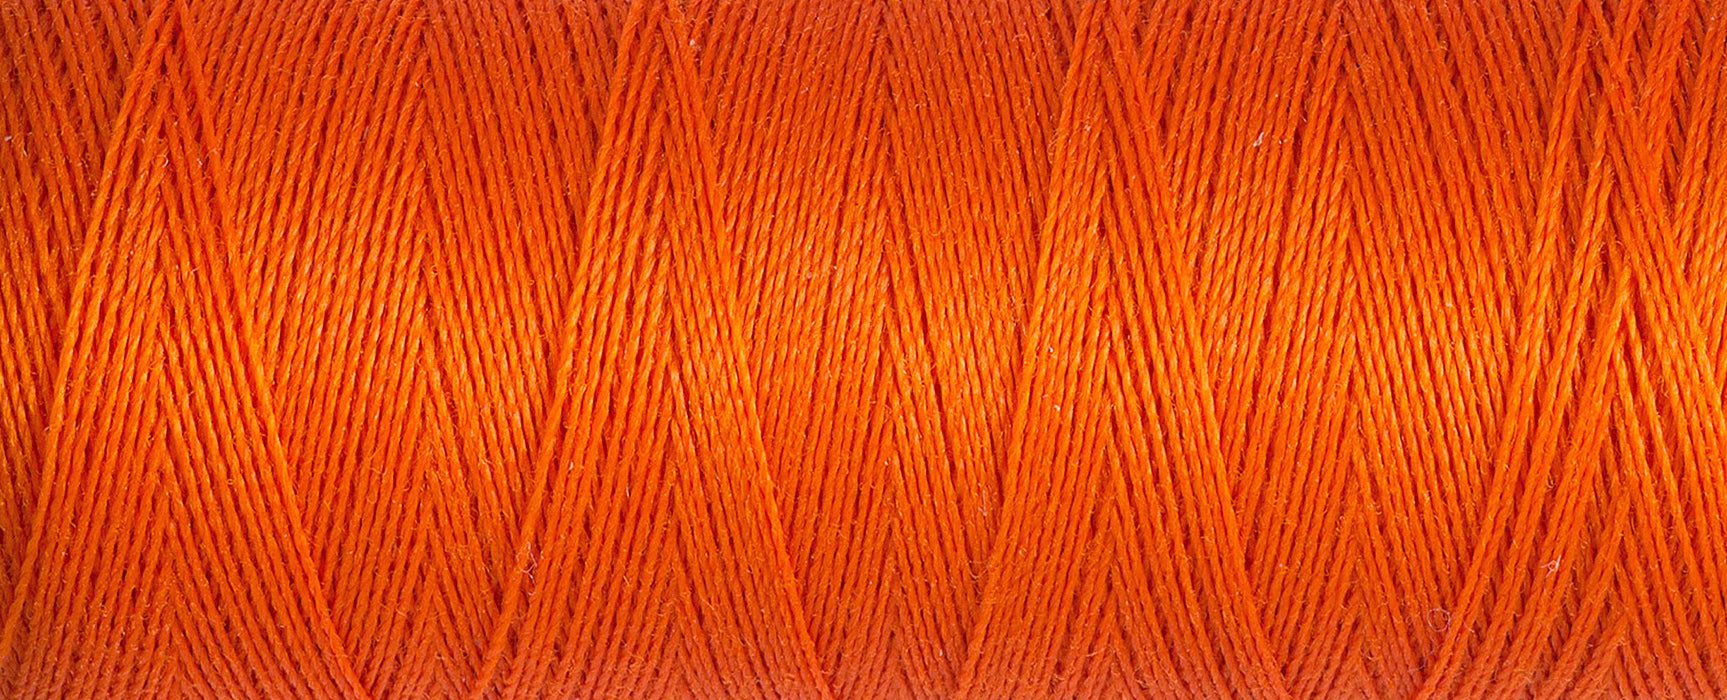 351 Bright Orange - Gütermann Sew All rPET Thread 100m